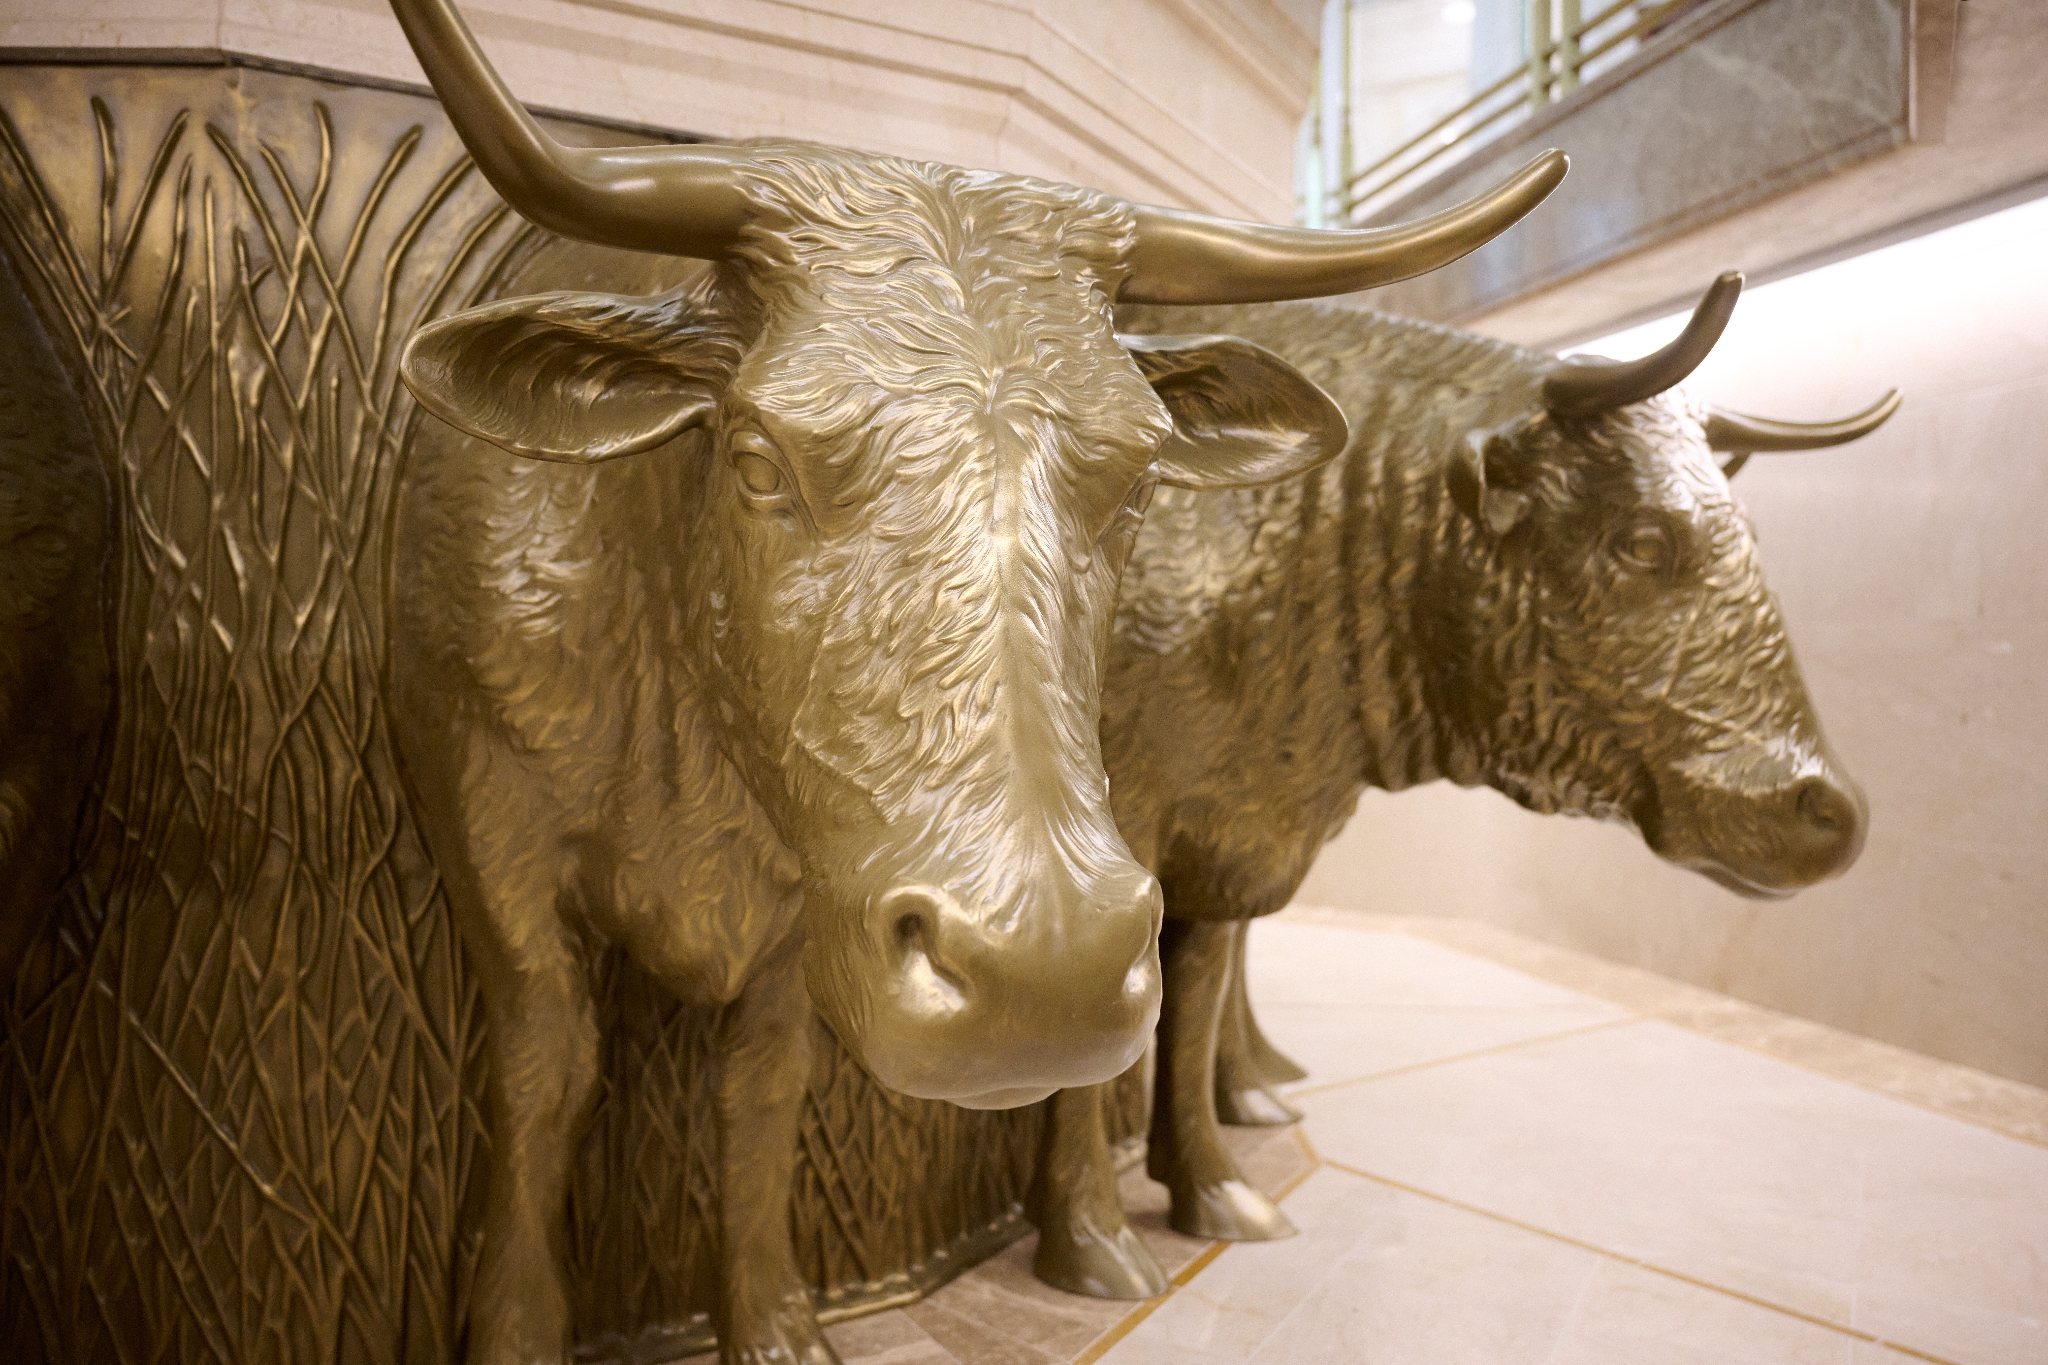 A close-up of a metal oxen statue.